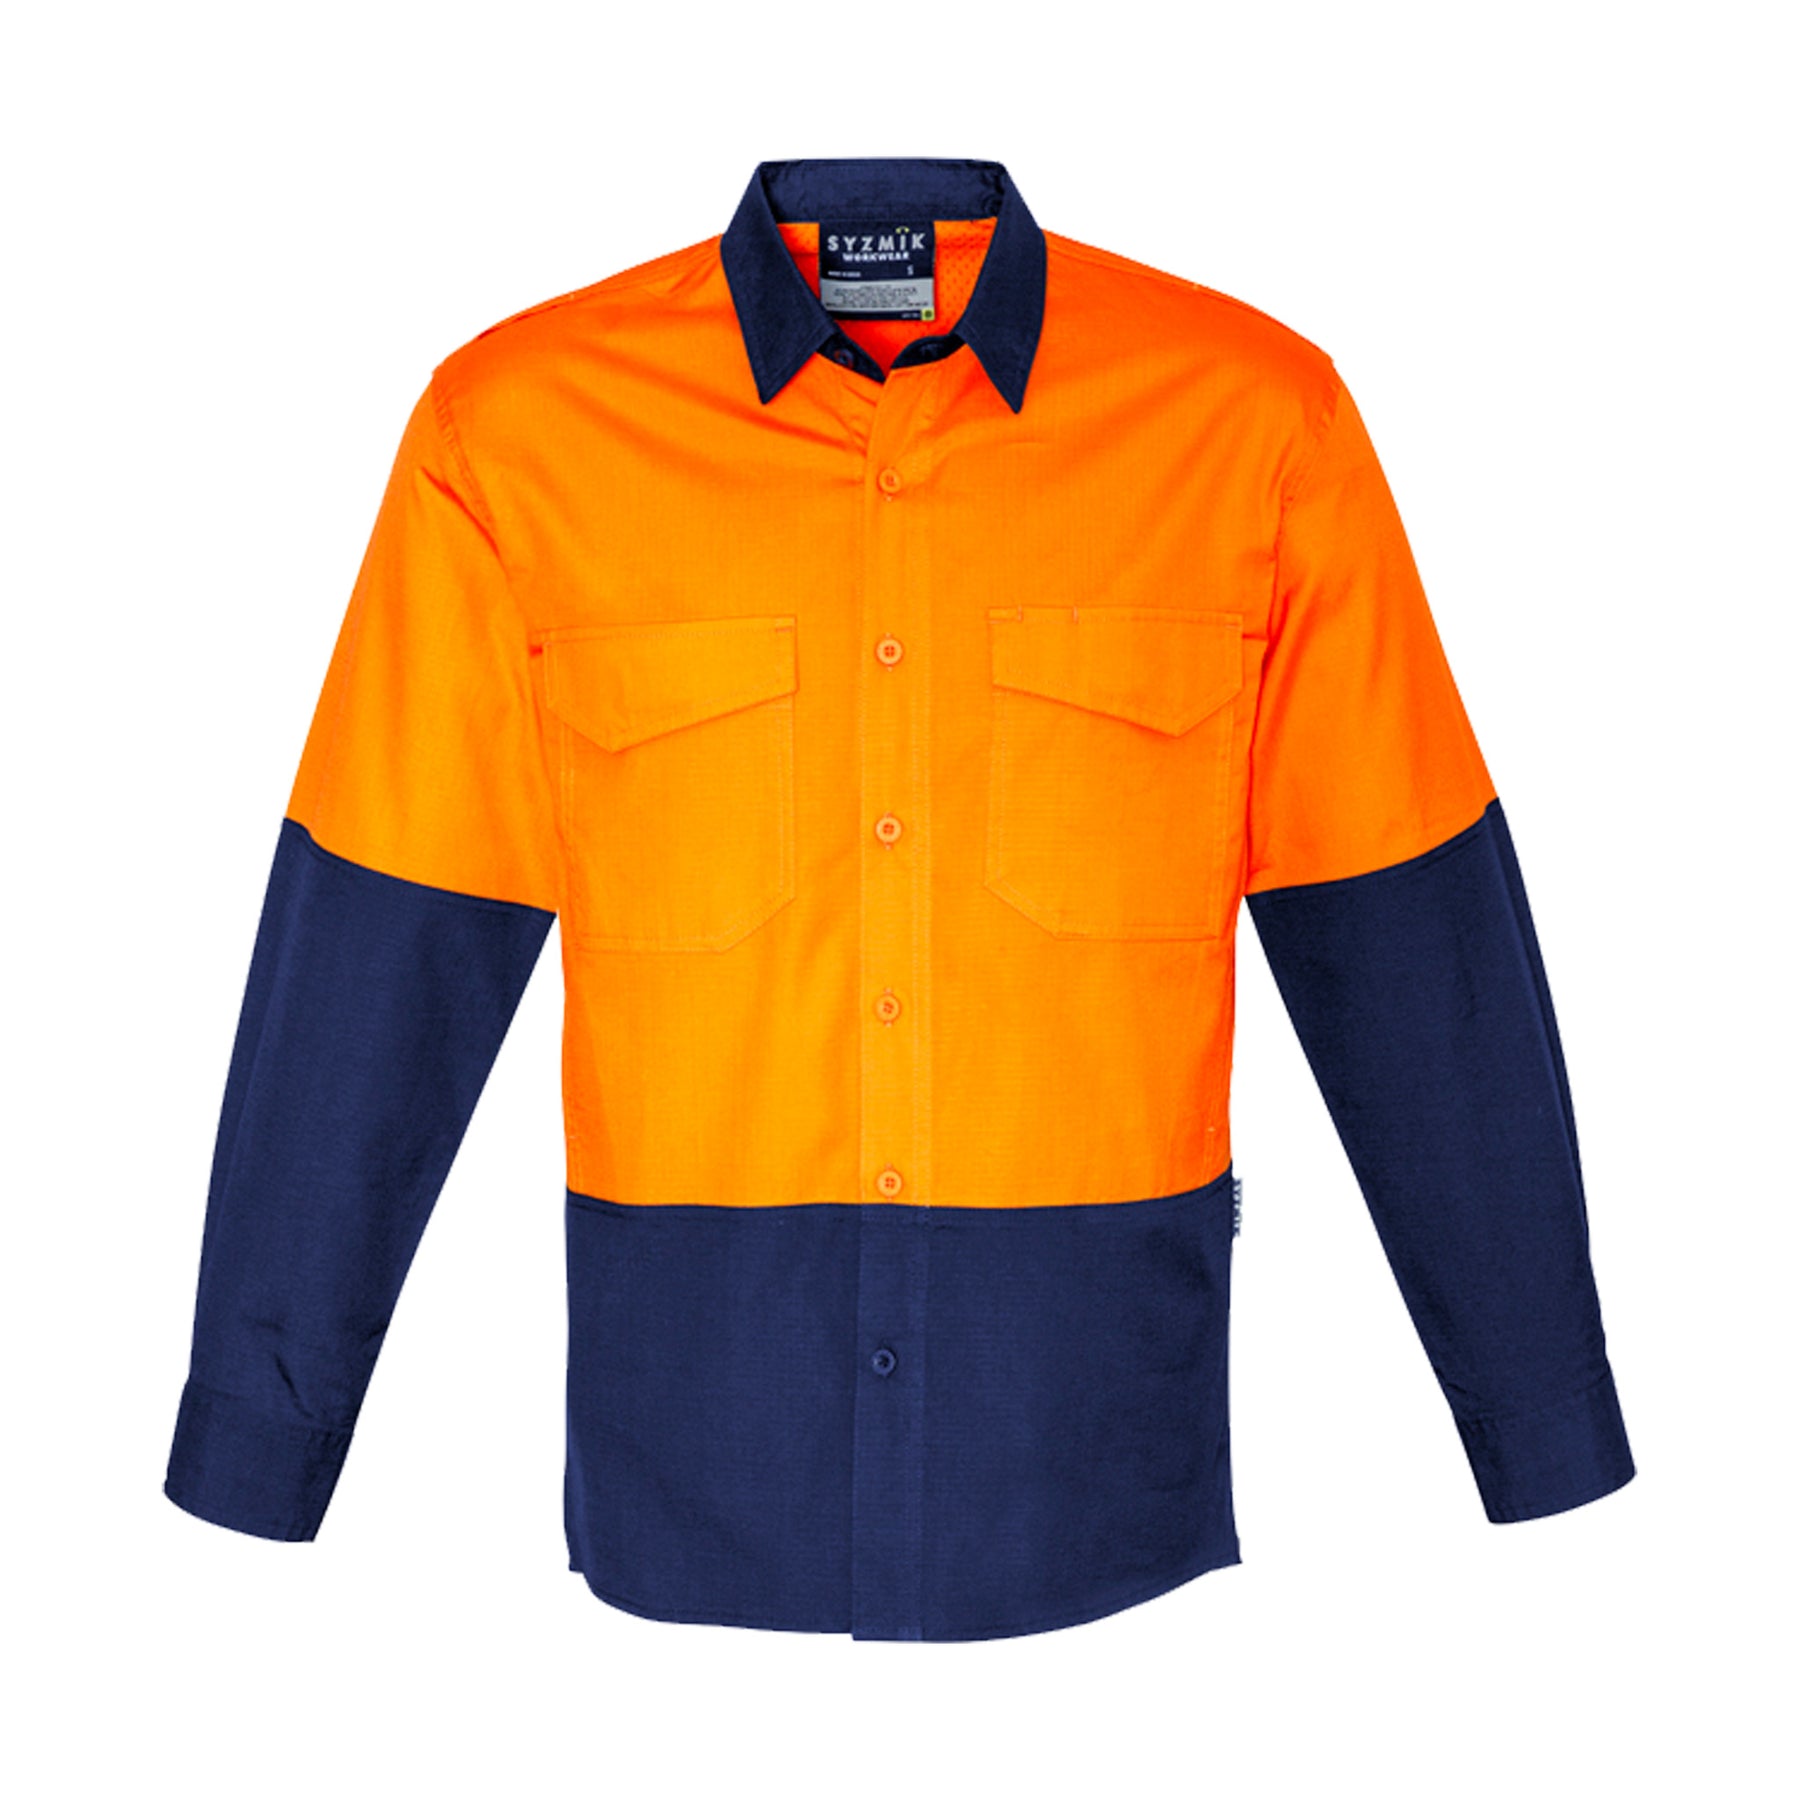 hi vis spliced rugged shirt in orange navy